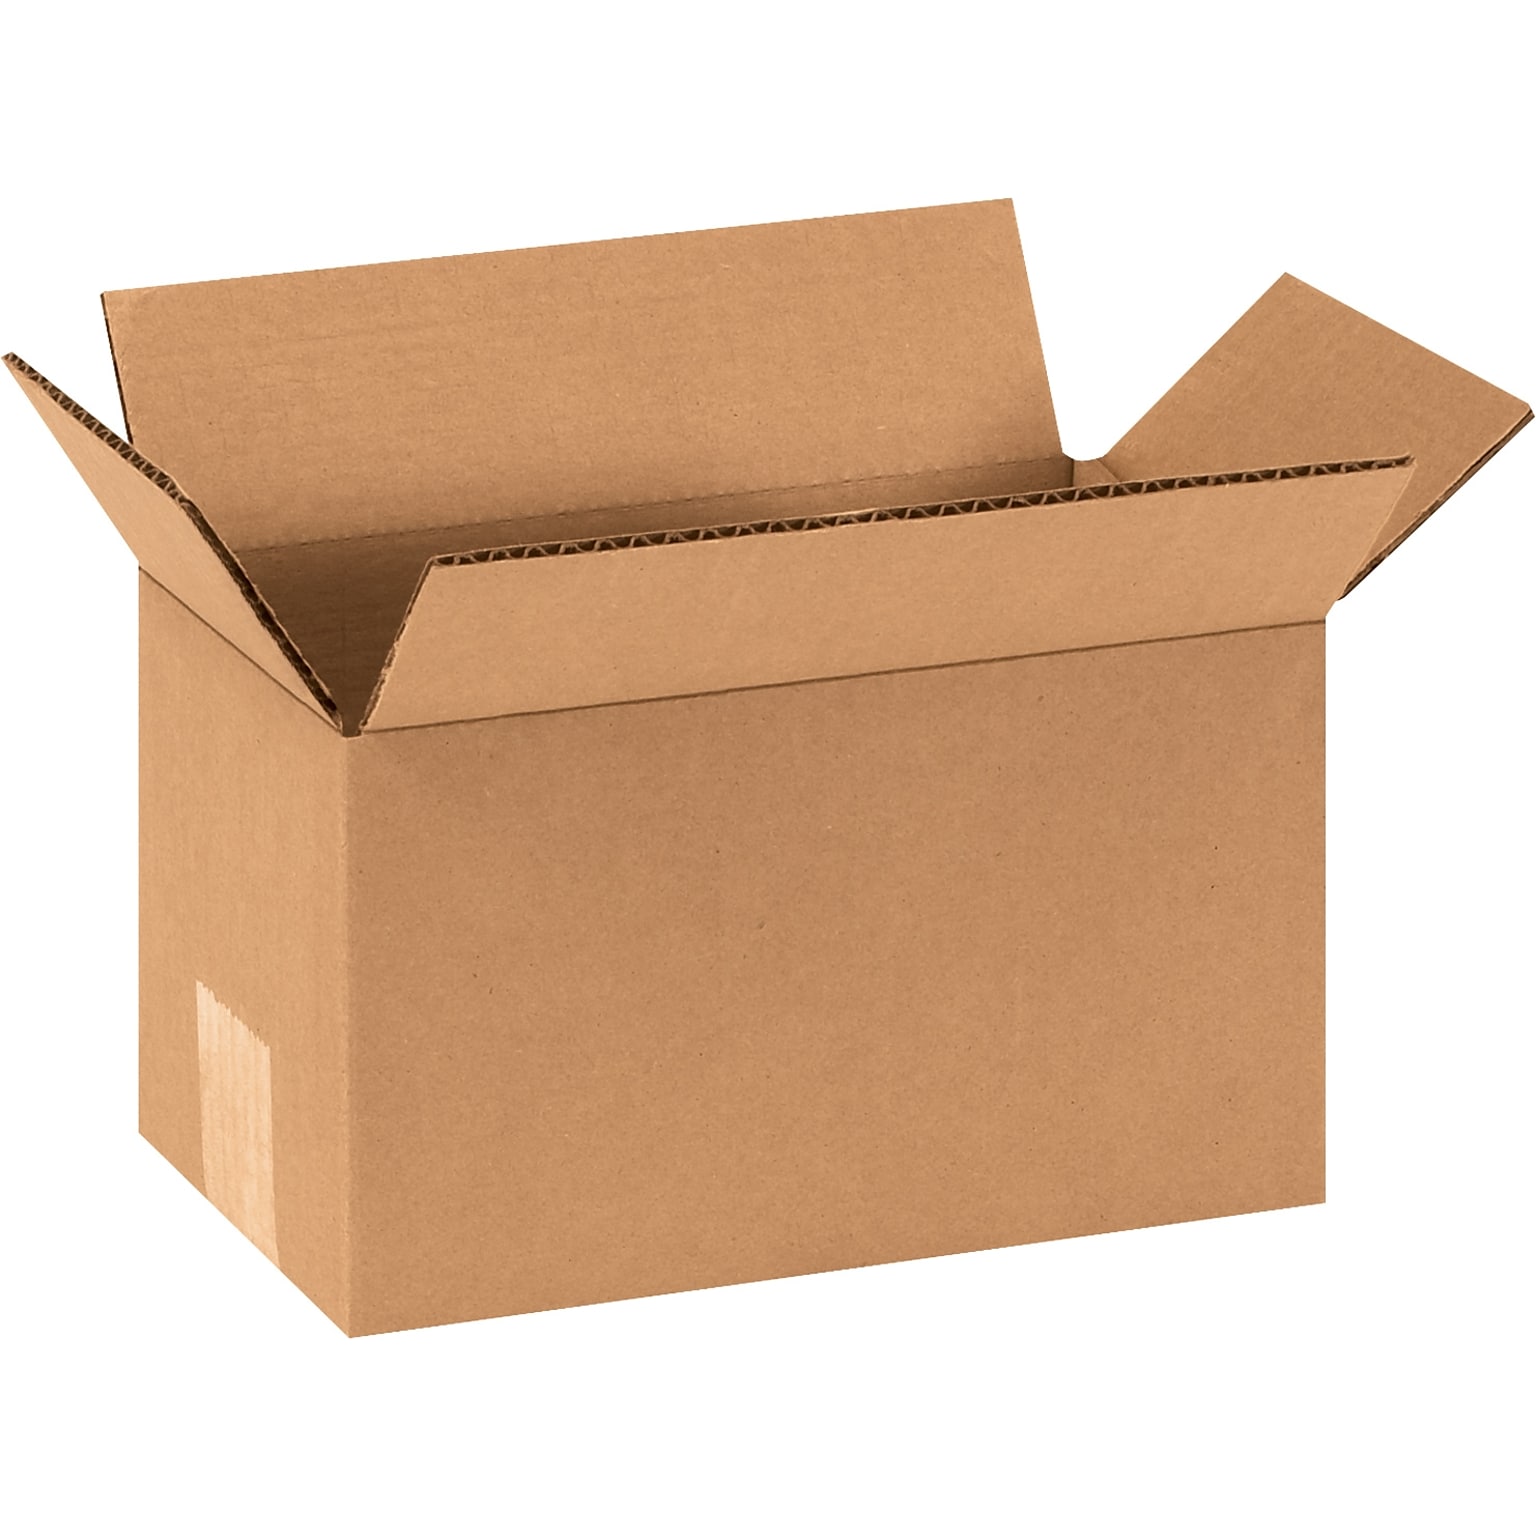 9 x 5 x 4 Shipping Boxes, 32 ECT, Brown, 25/Bundle (954)